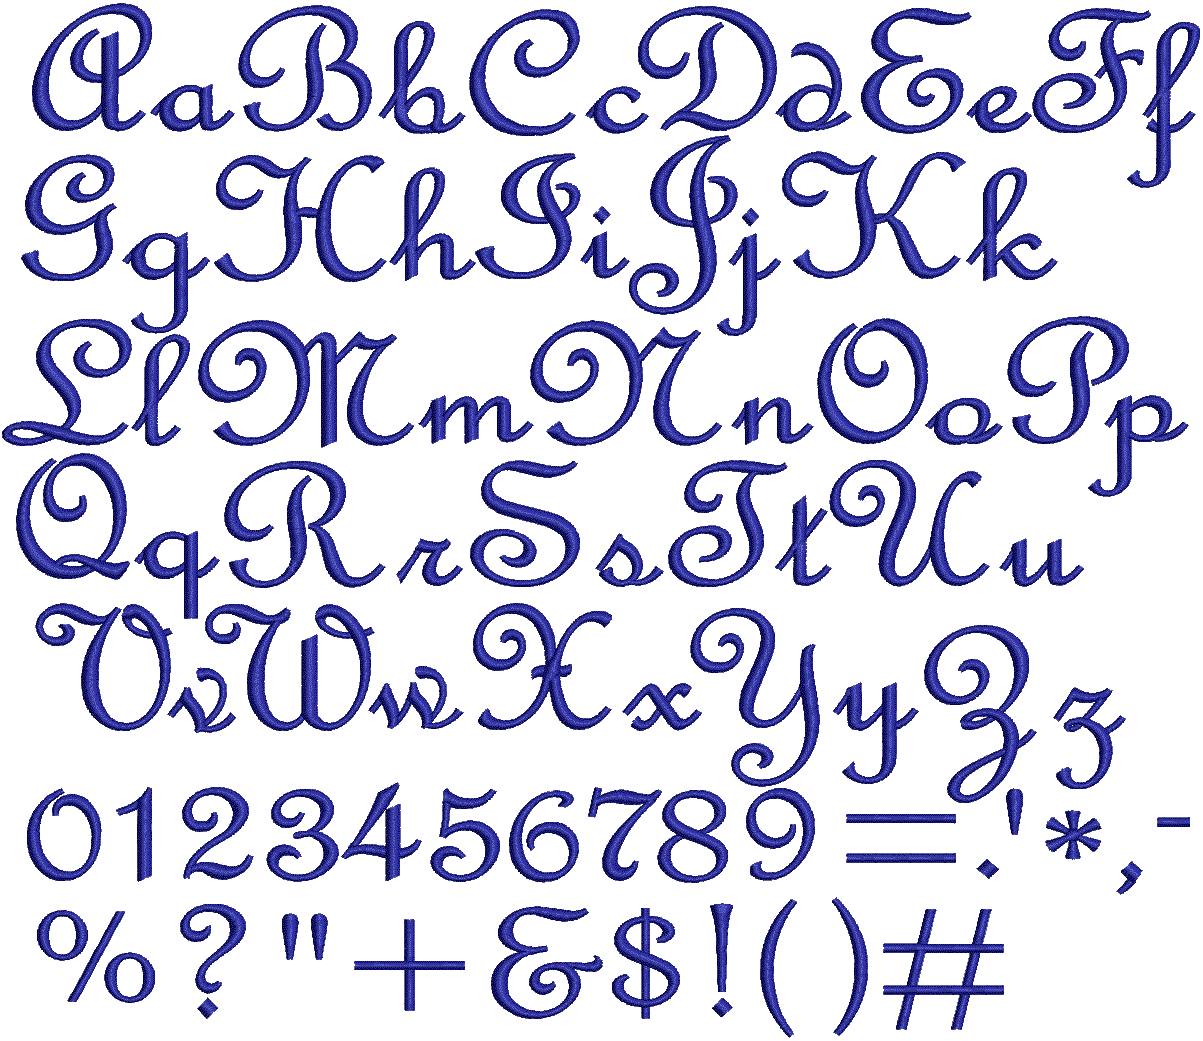 8-script-cursive-fonts-images-free-microsoft-word-fonts-cursive-cursive-tattoo-fonts-script